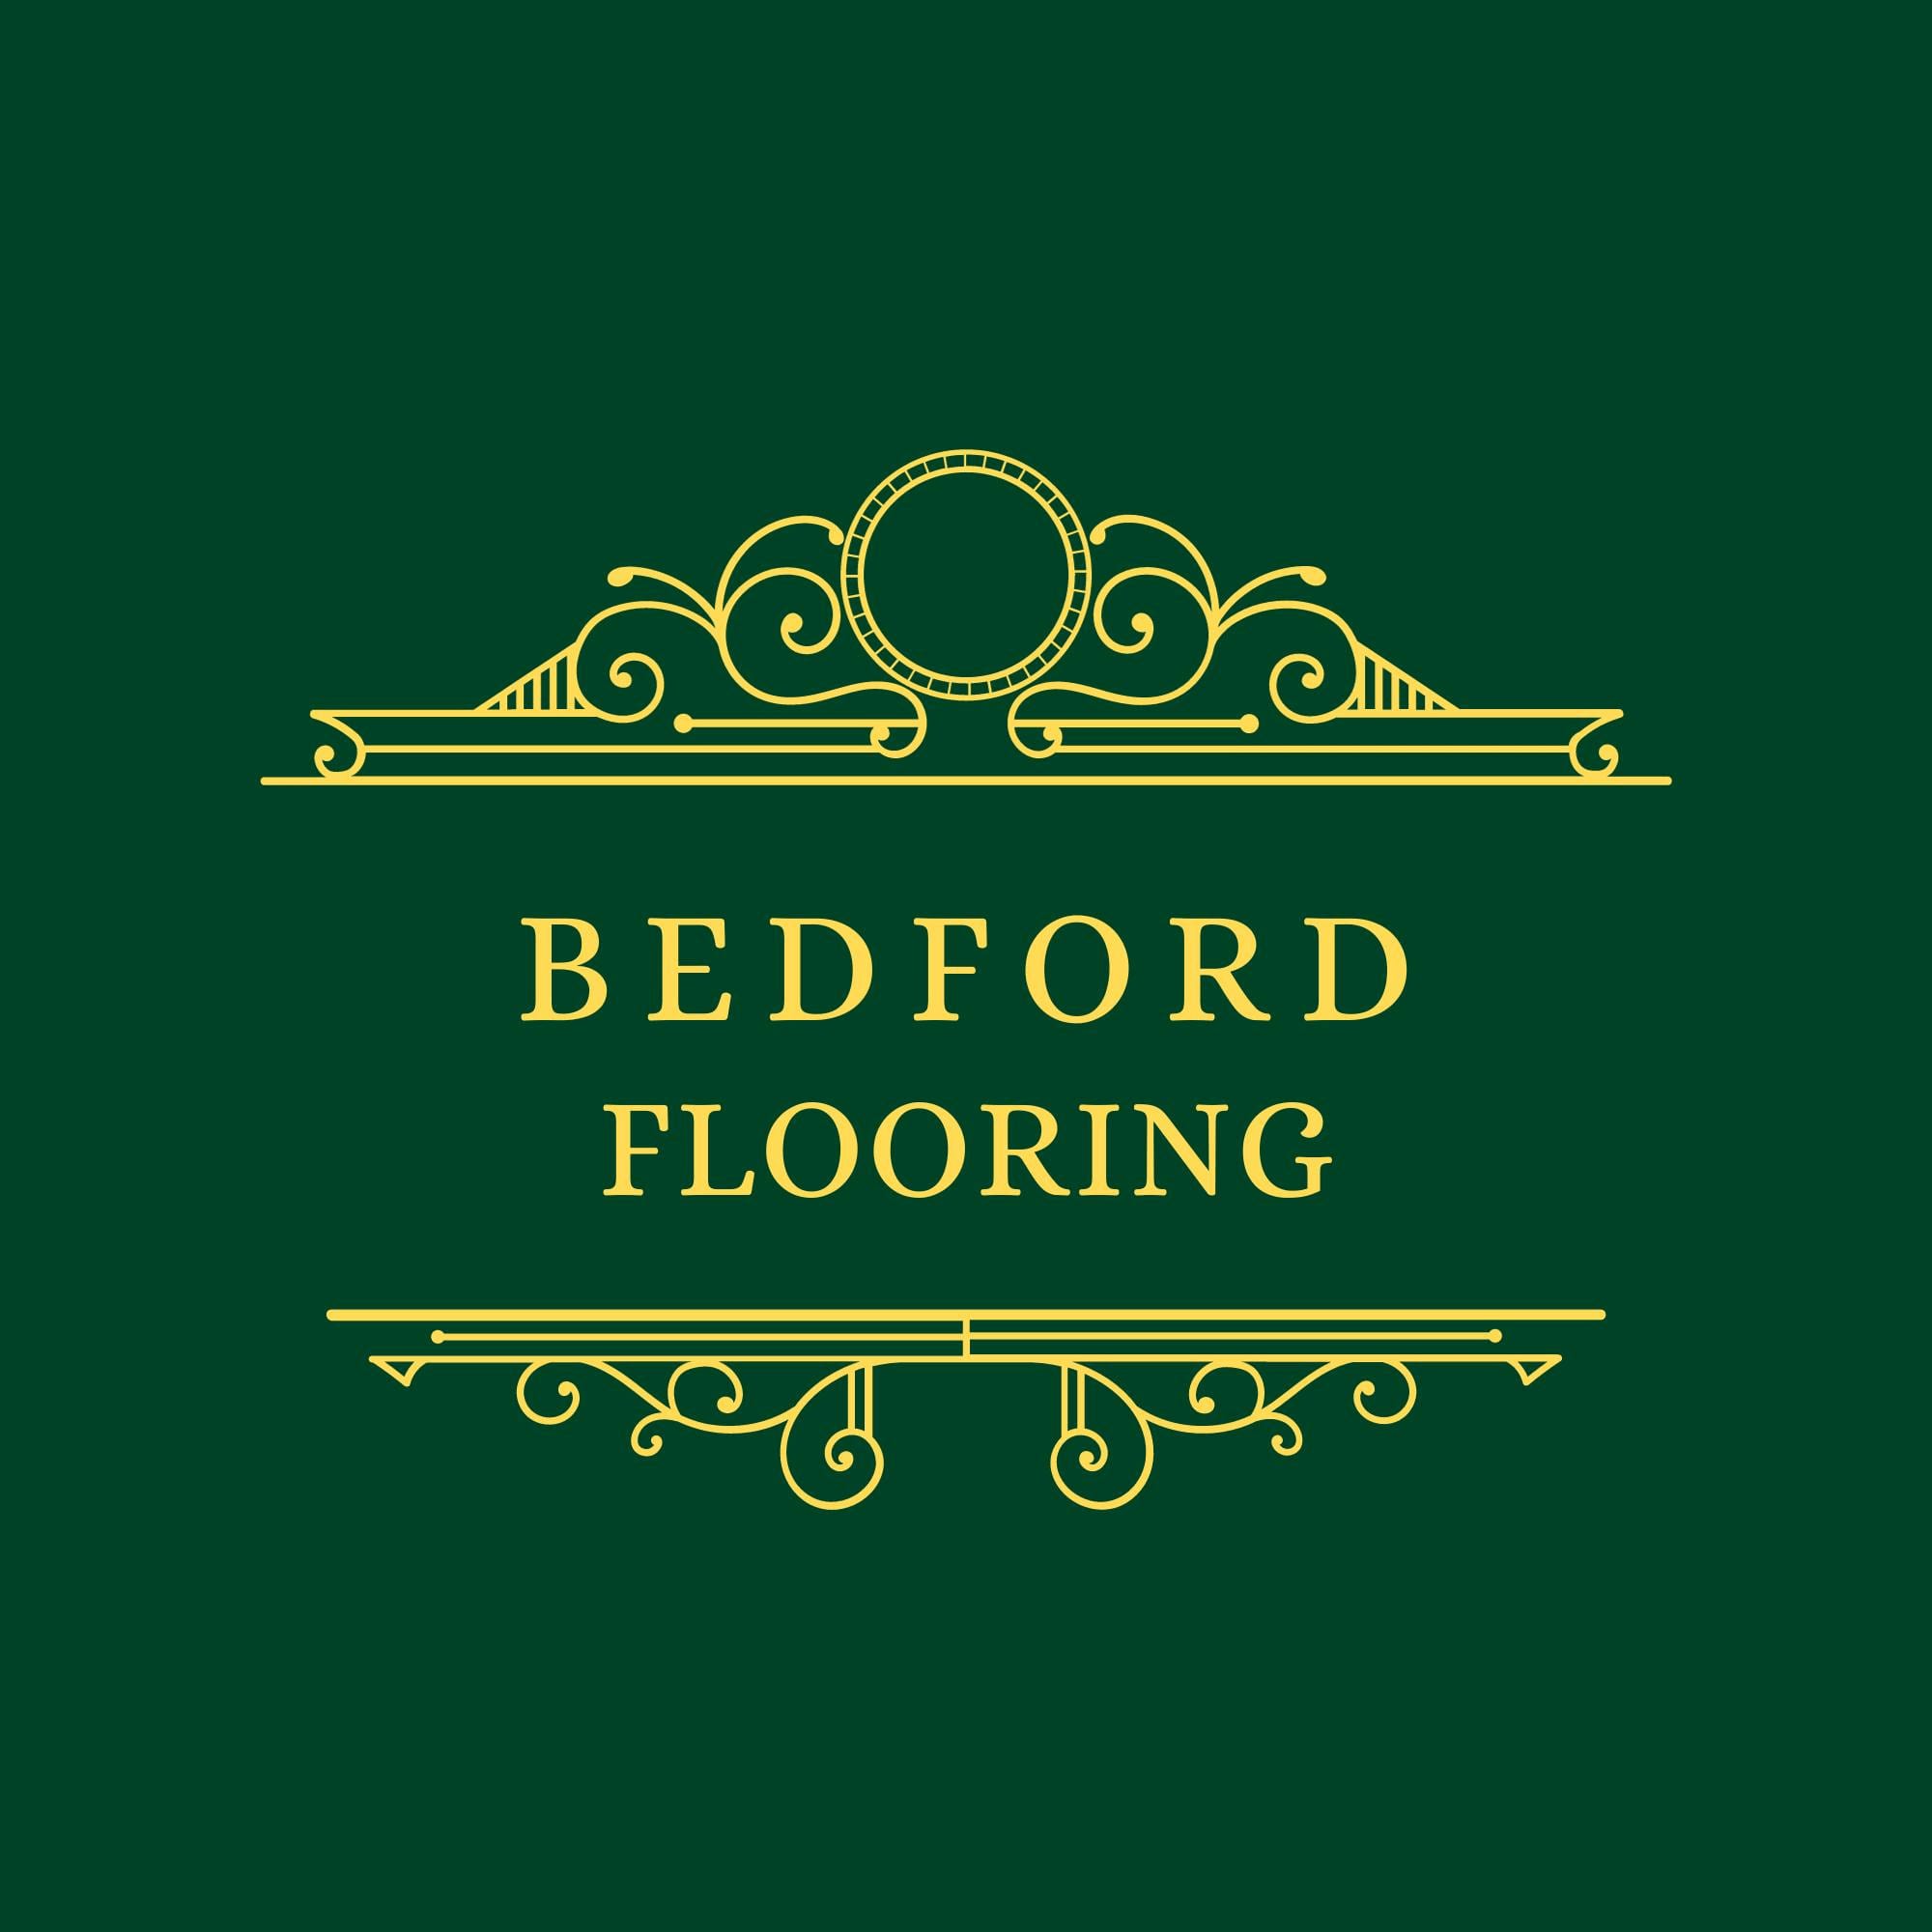 Bedford Flooring - Newark, Nottinghamshire - 07399 635540 | ShowMeLocal.com